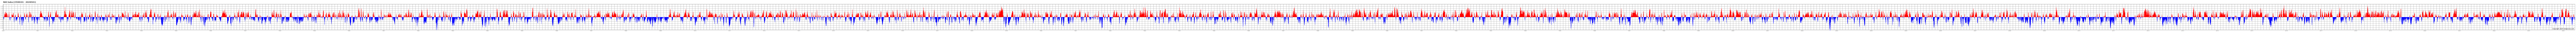 NAO-Index seit 1950 Tageswerte